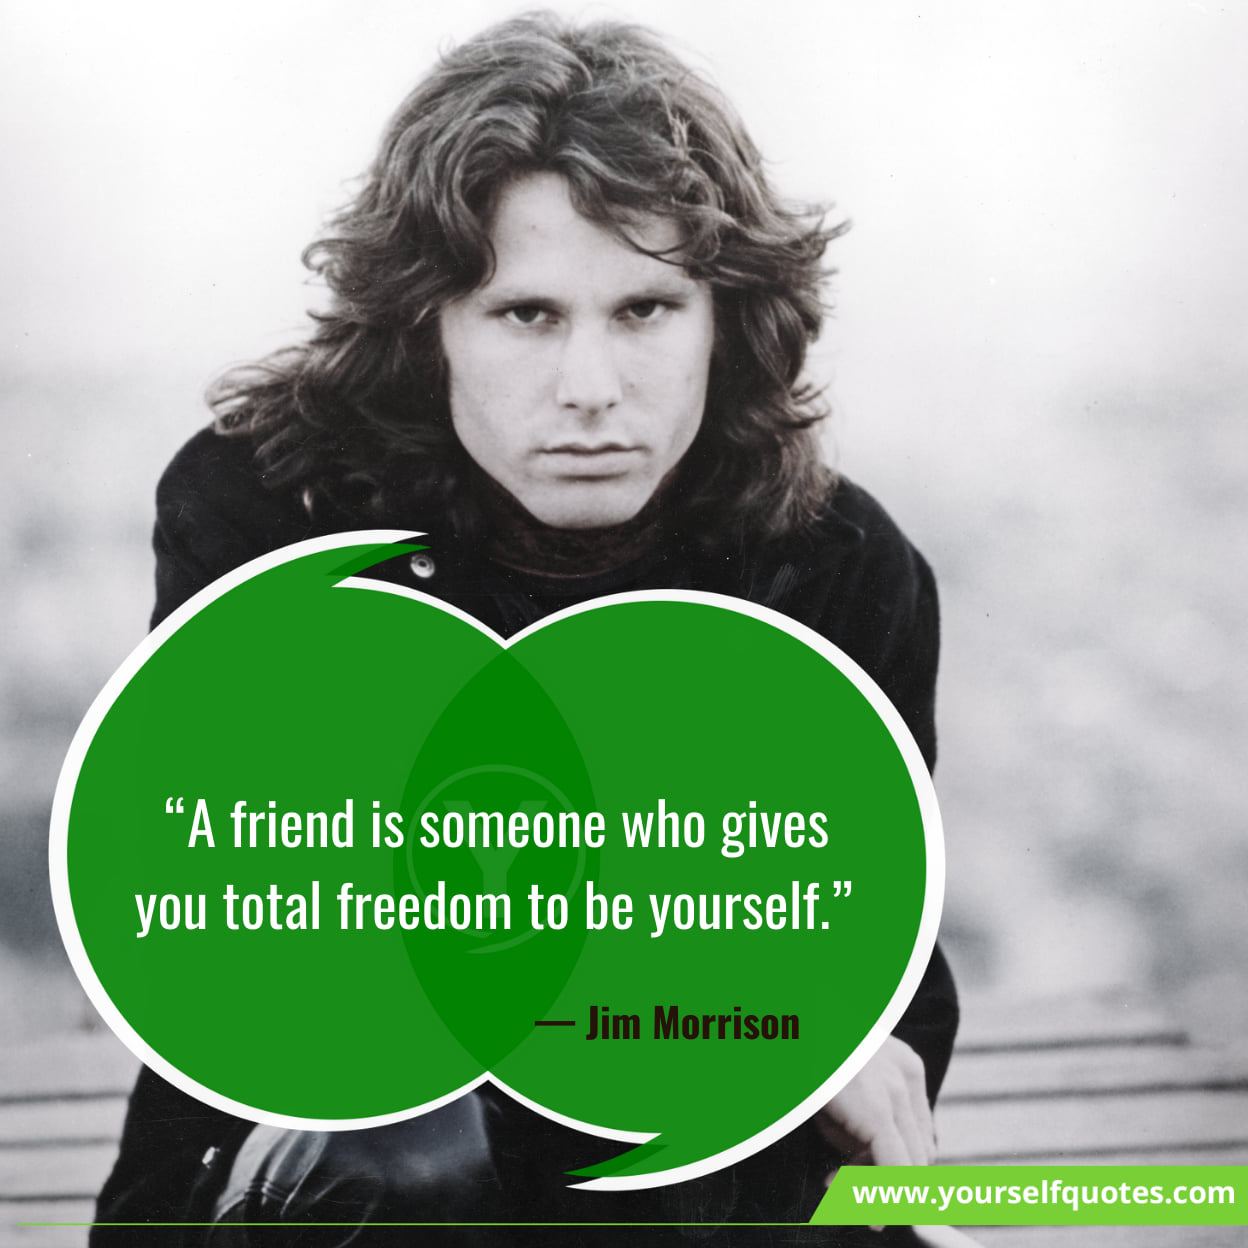 6 Inspirational Jim Morrison Quotes